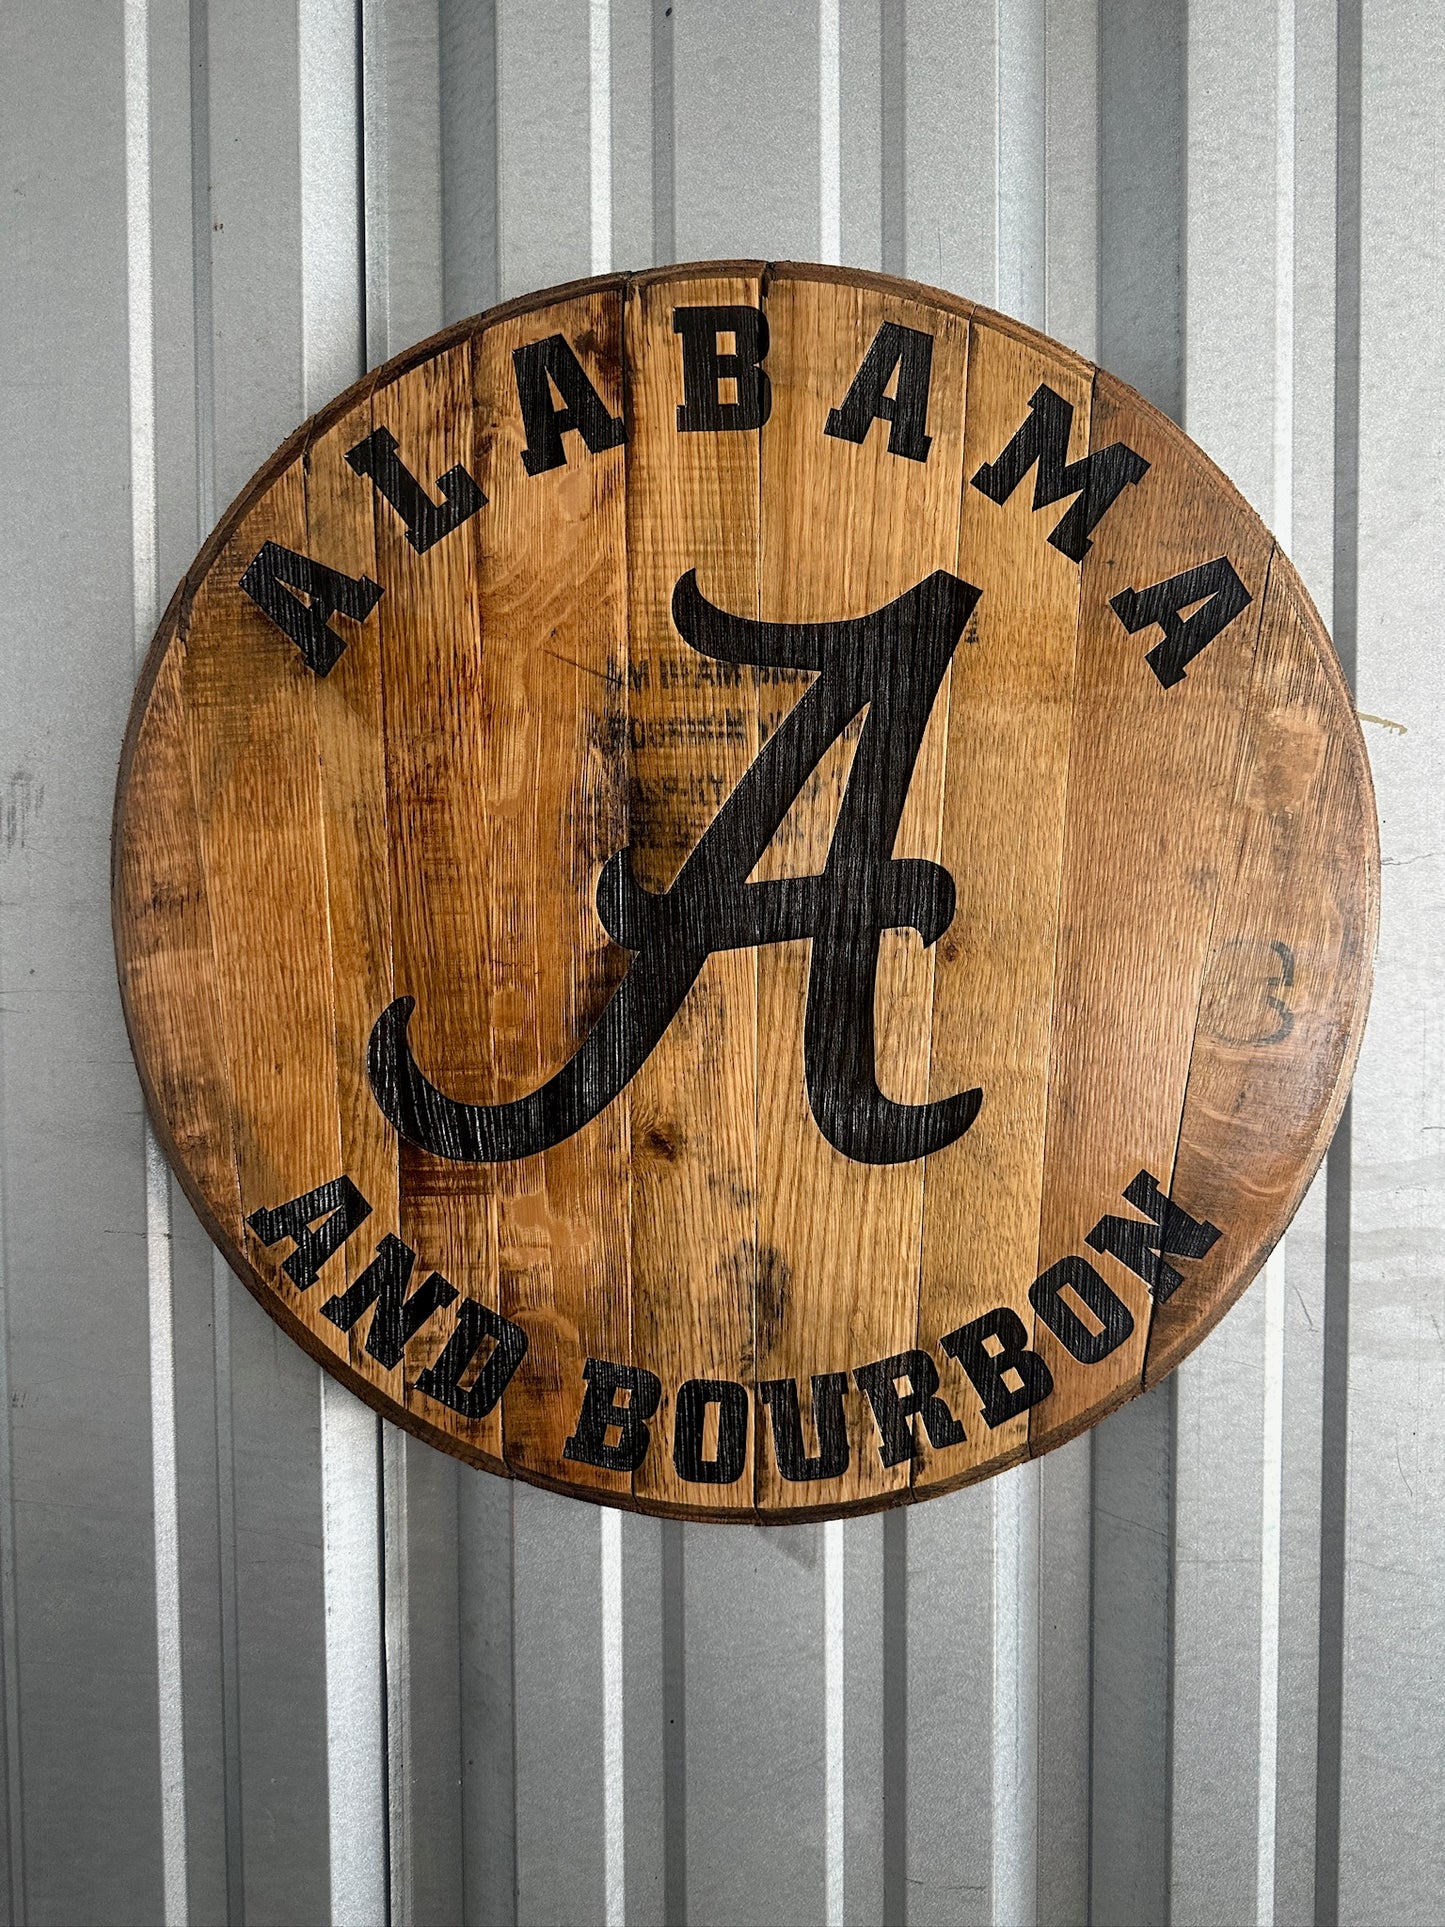 Alabama and Bourbon